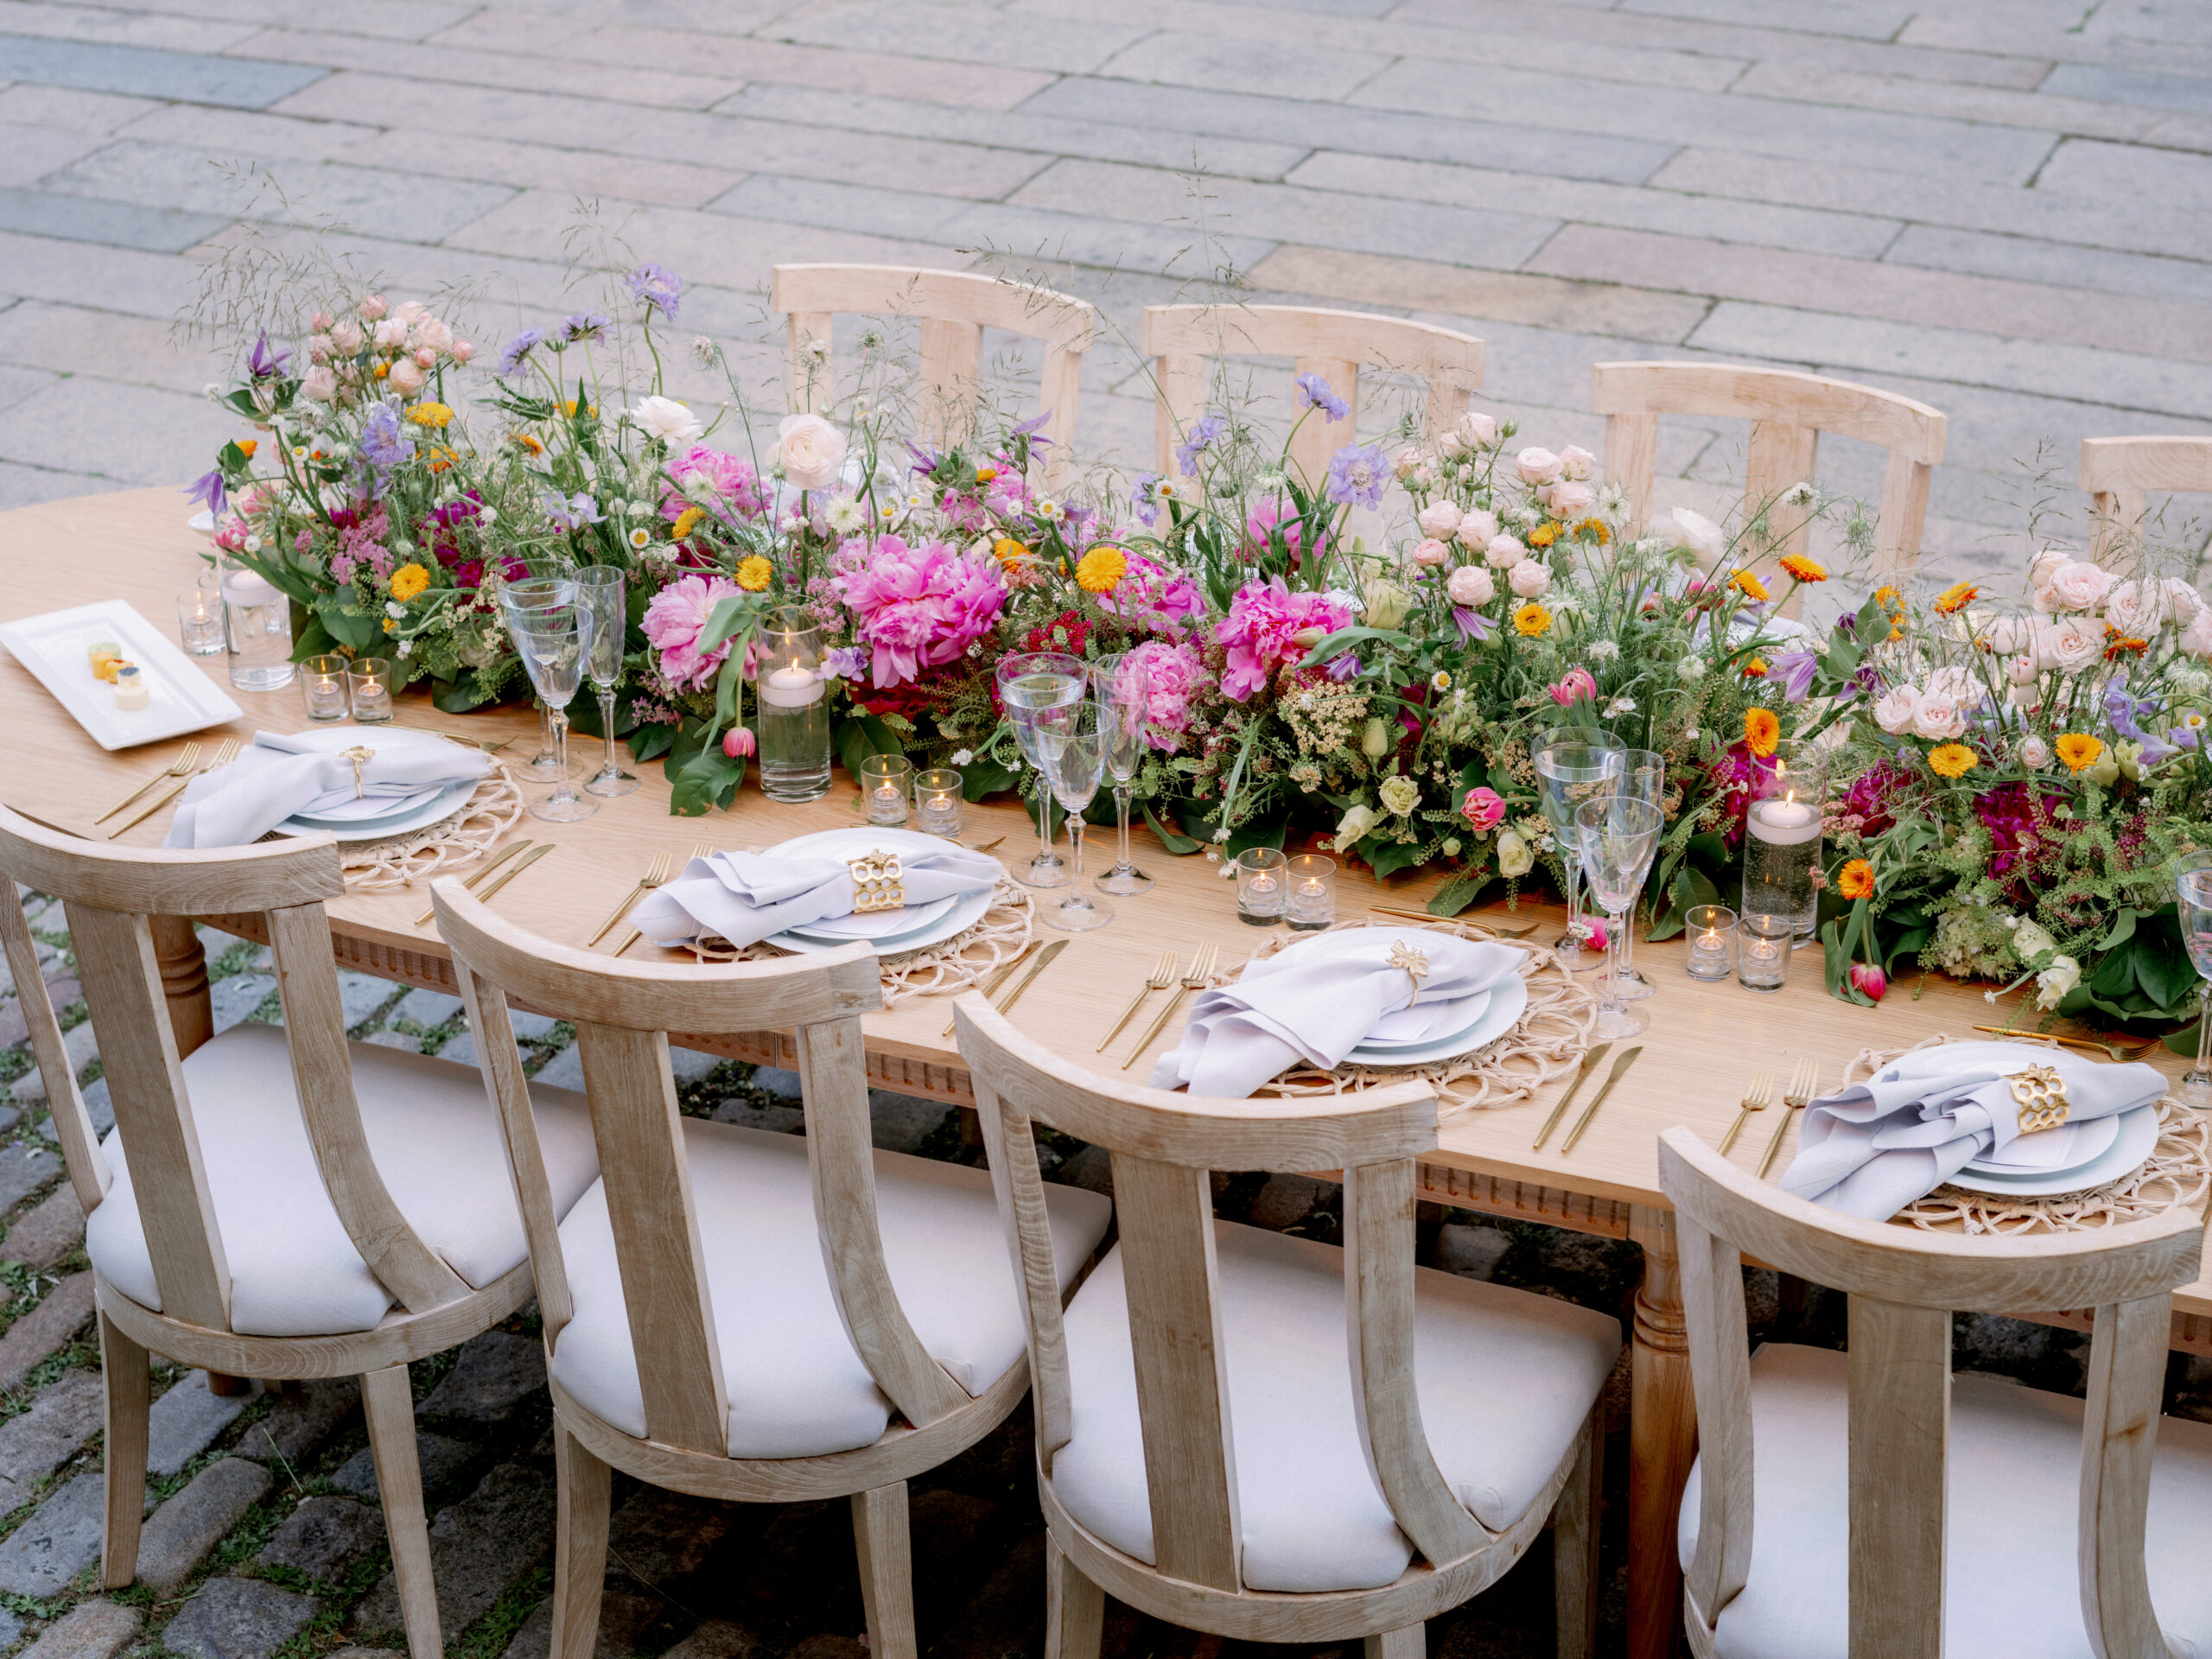 Elegant long table wedding dinner set up. High-quality wedding photography image by Jenny Fu Studio.